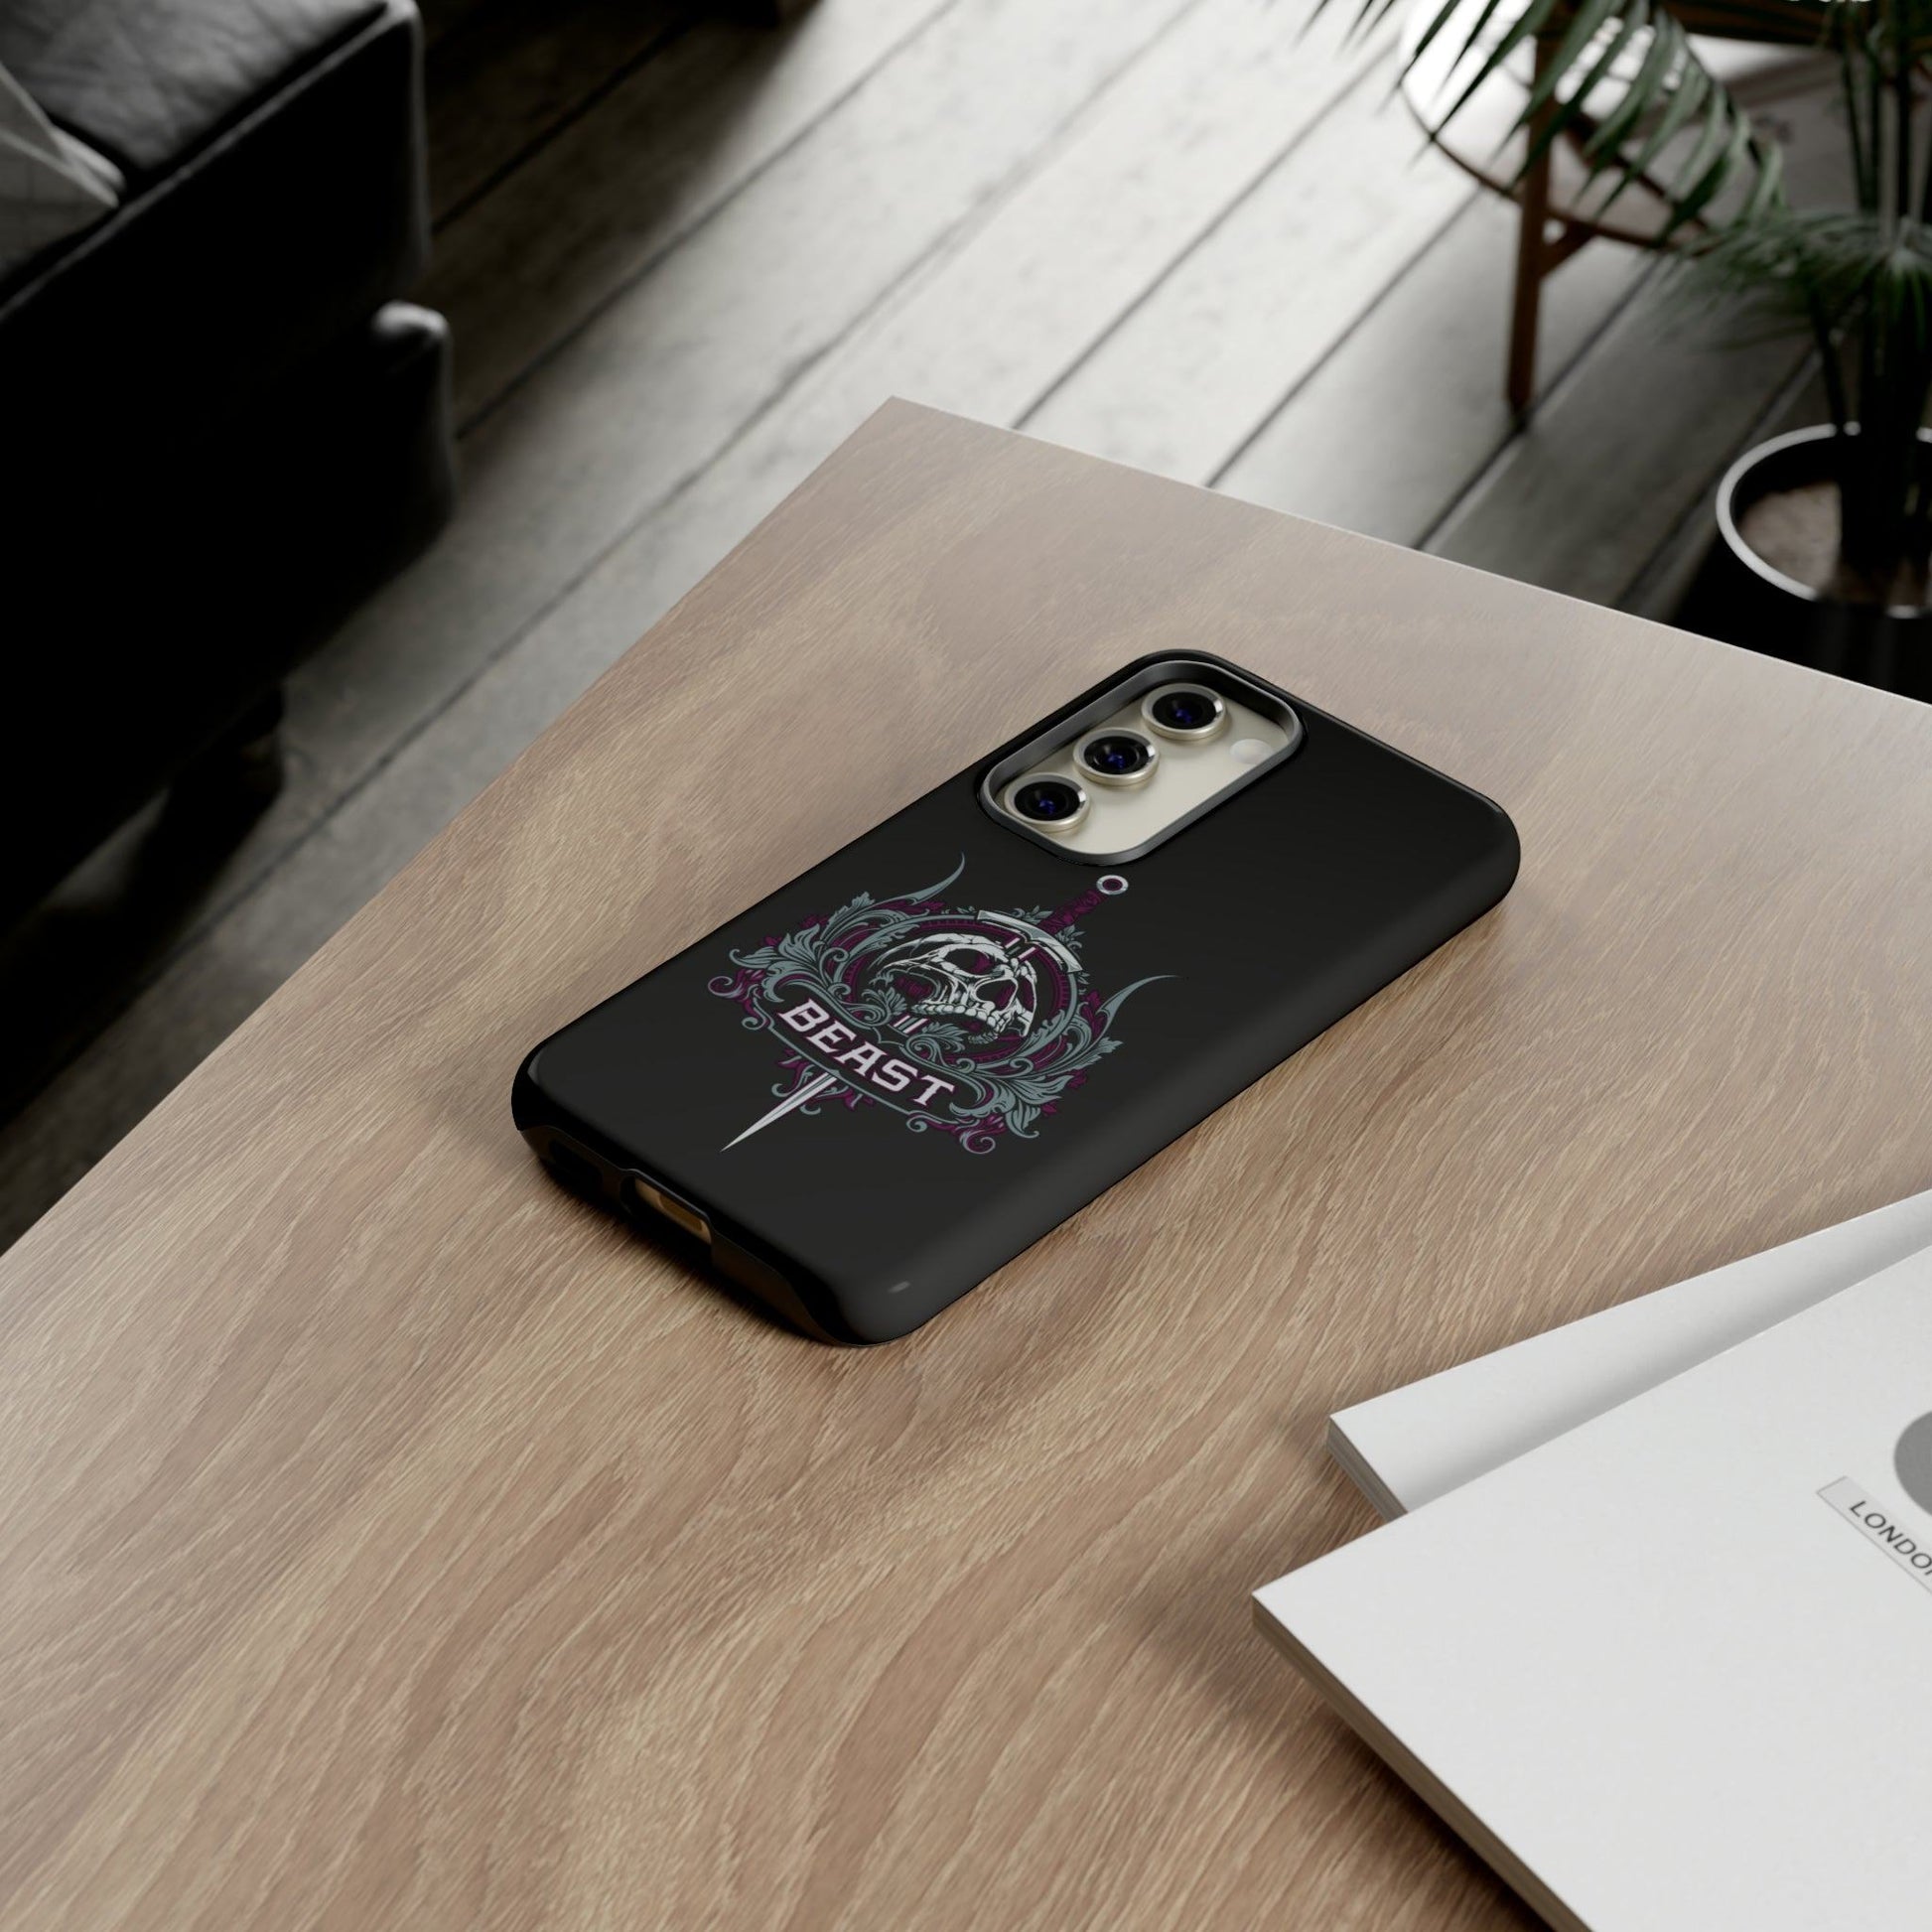 Beast Samsung Handyhülle -- Beast Samsung Handyhülle - undefined Phone Case | JLR Design